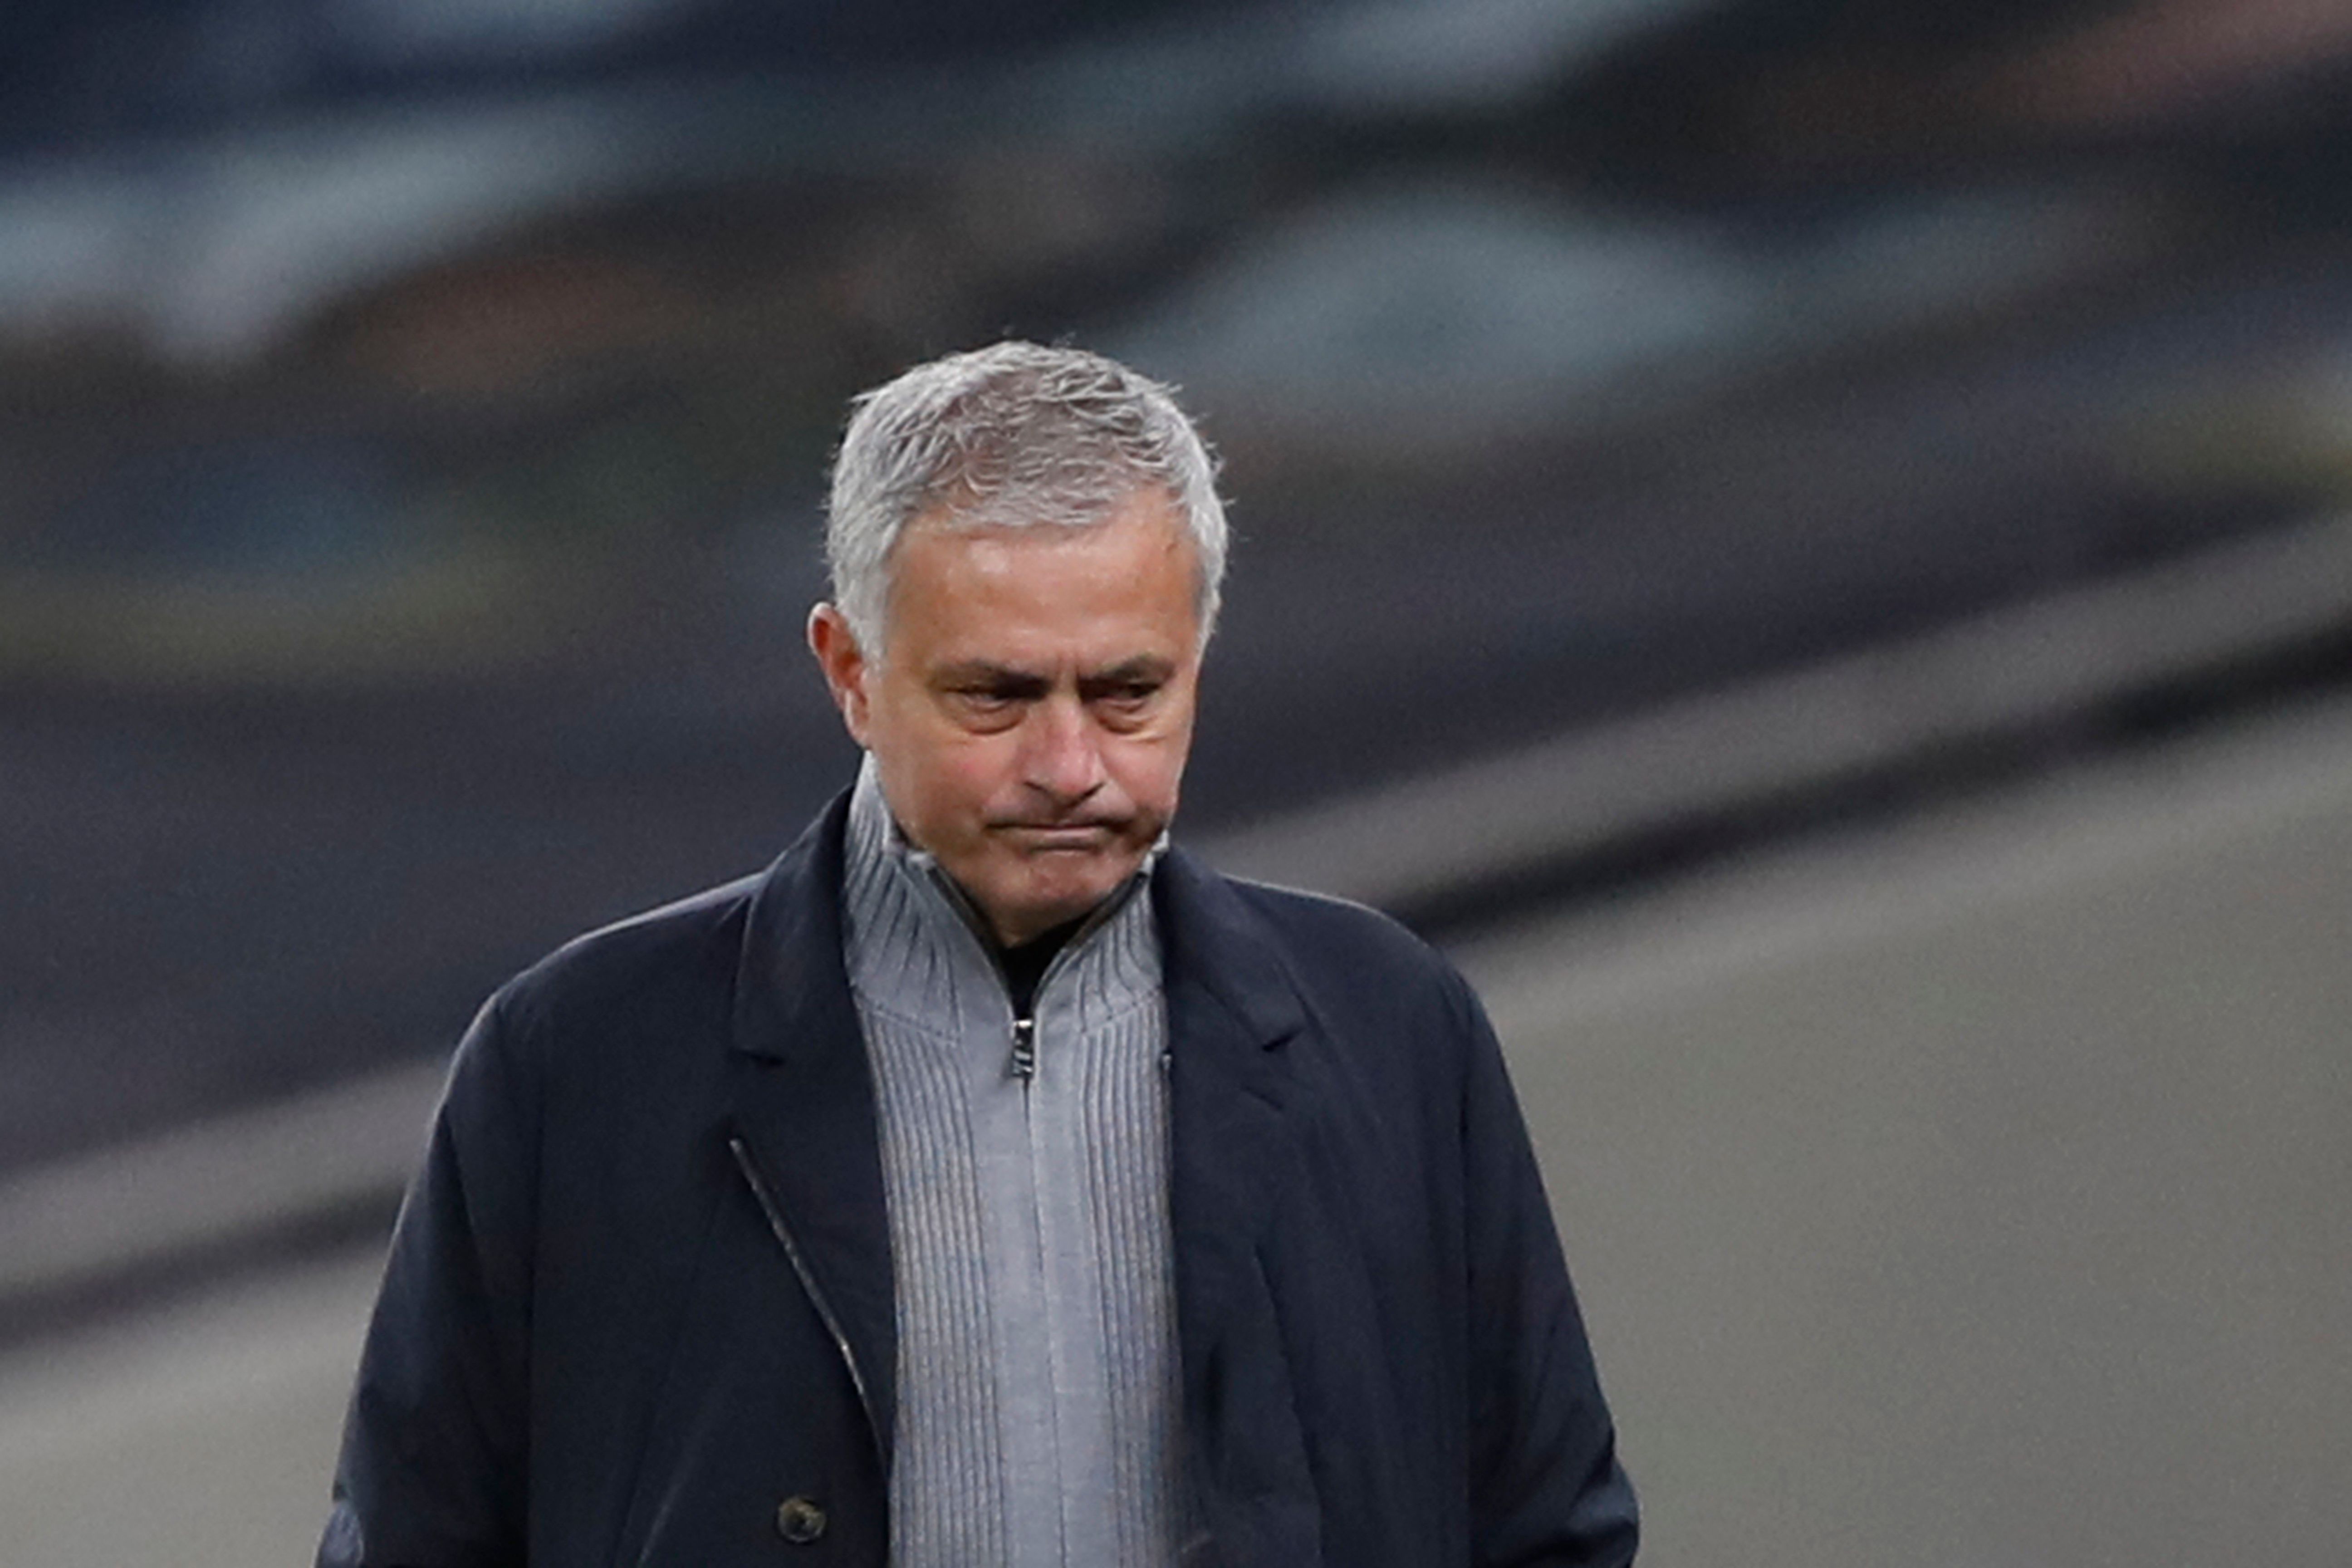 José Mourinho, entrenador del Tottenham. (Foto Prensa Libre: AFP)